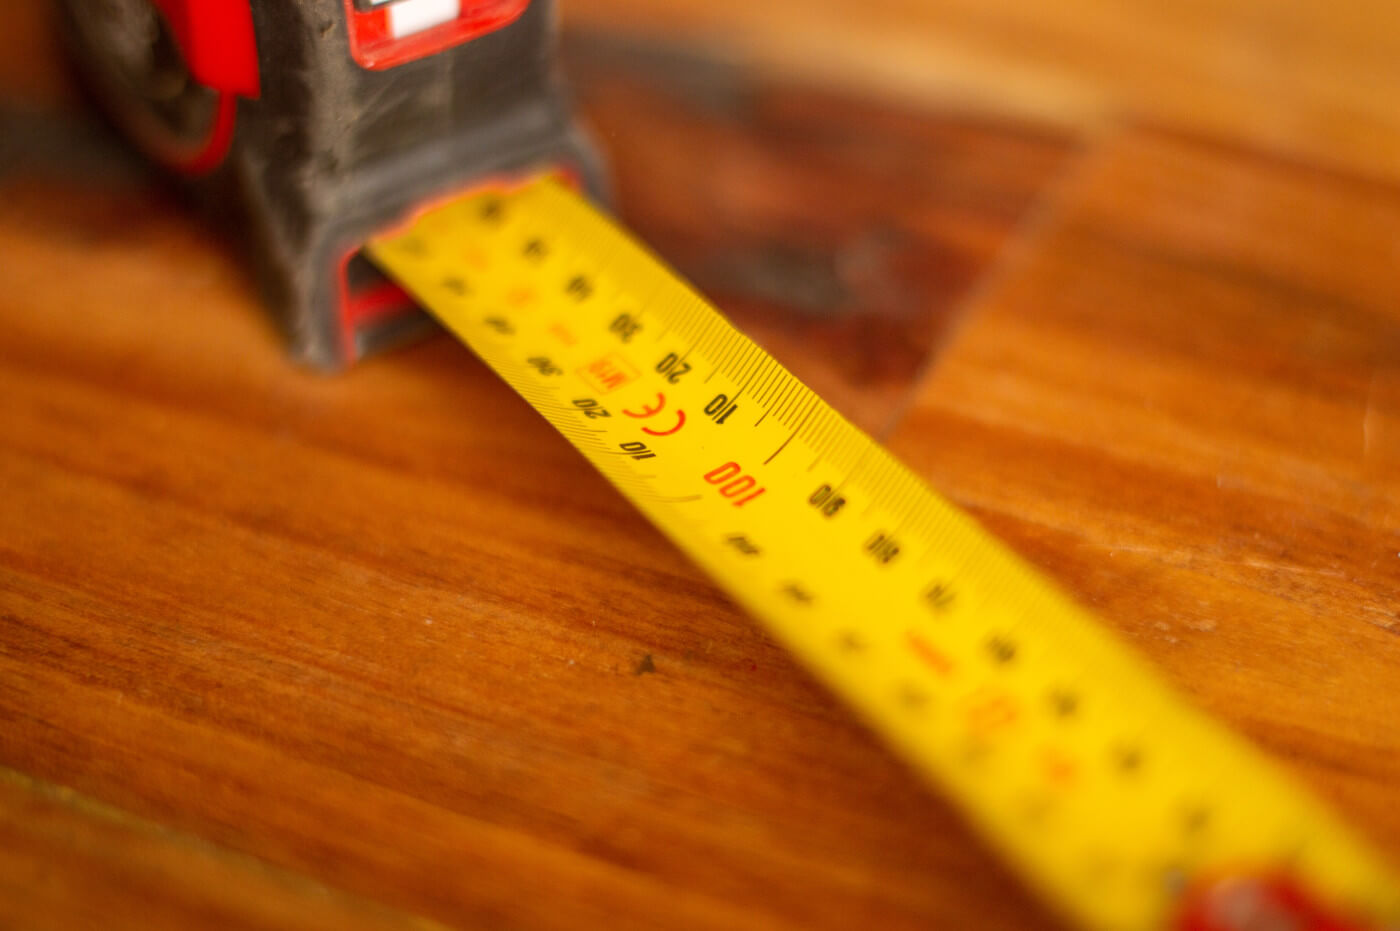 A tape measure